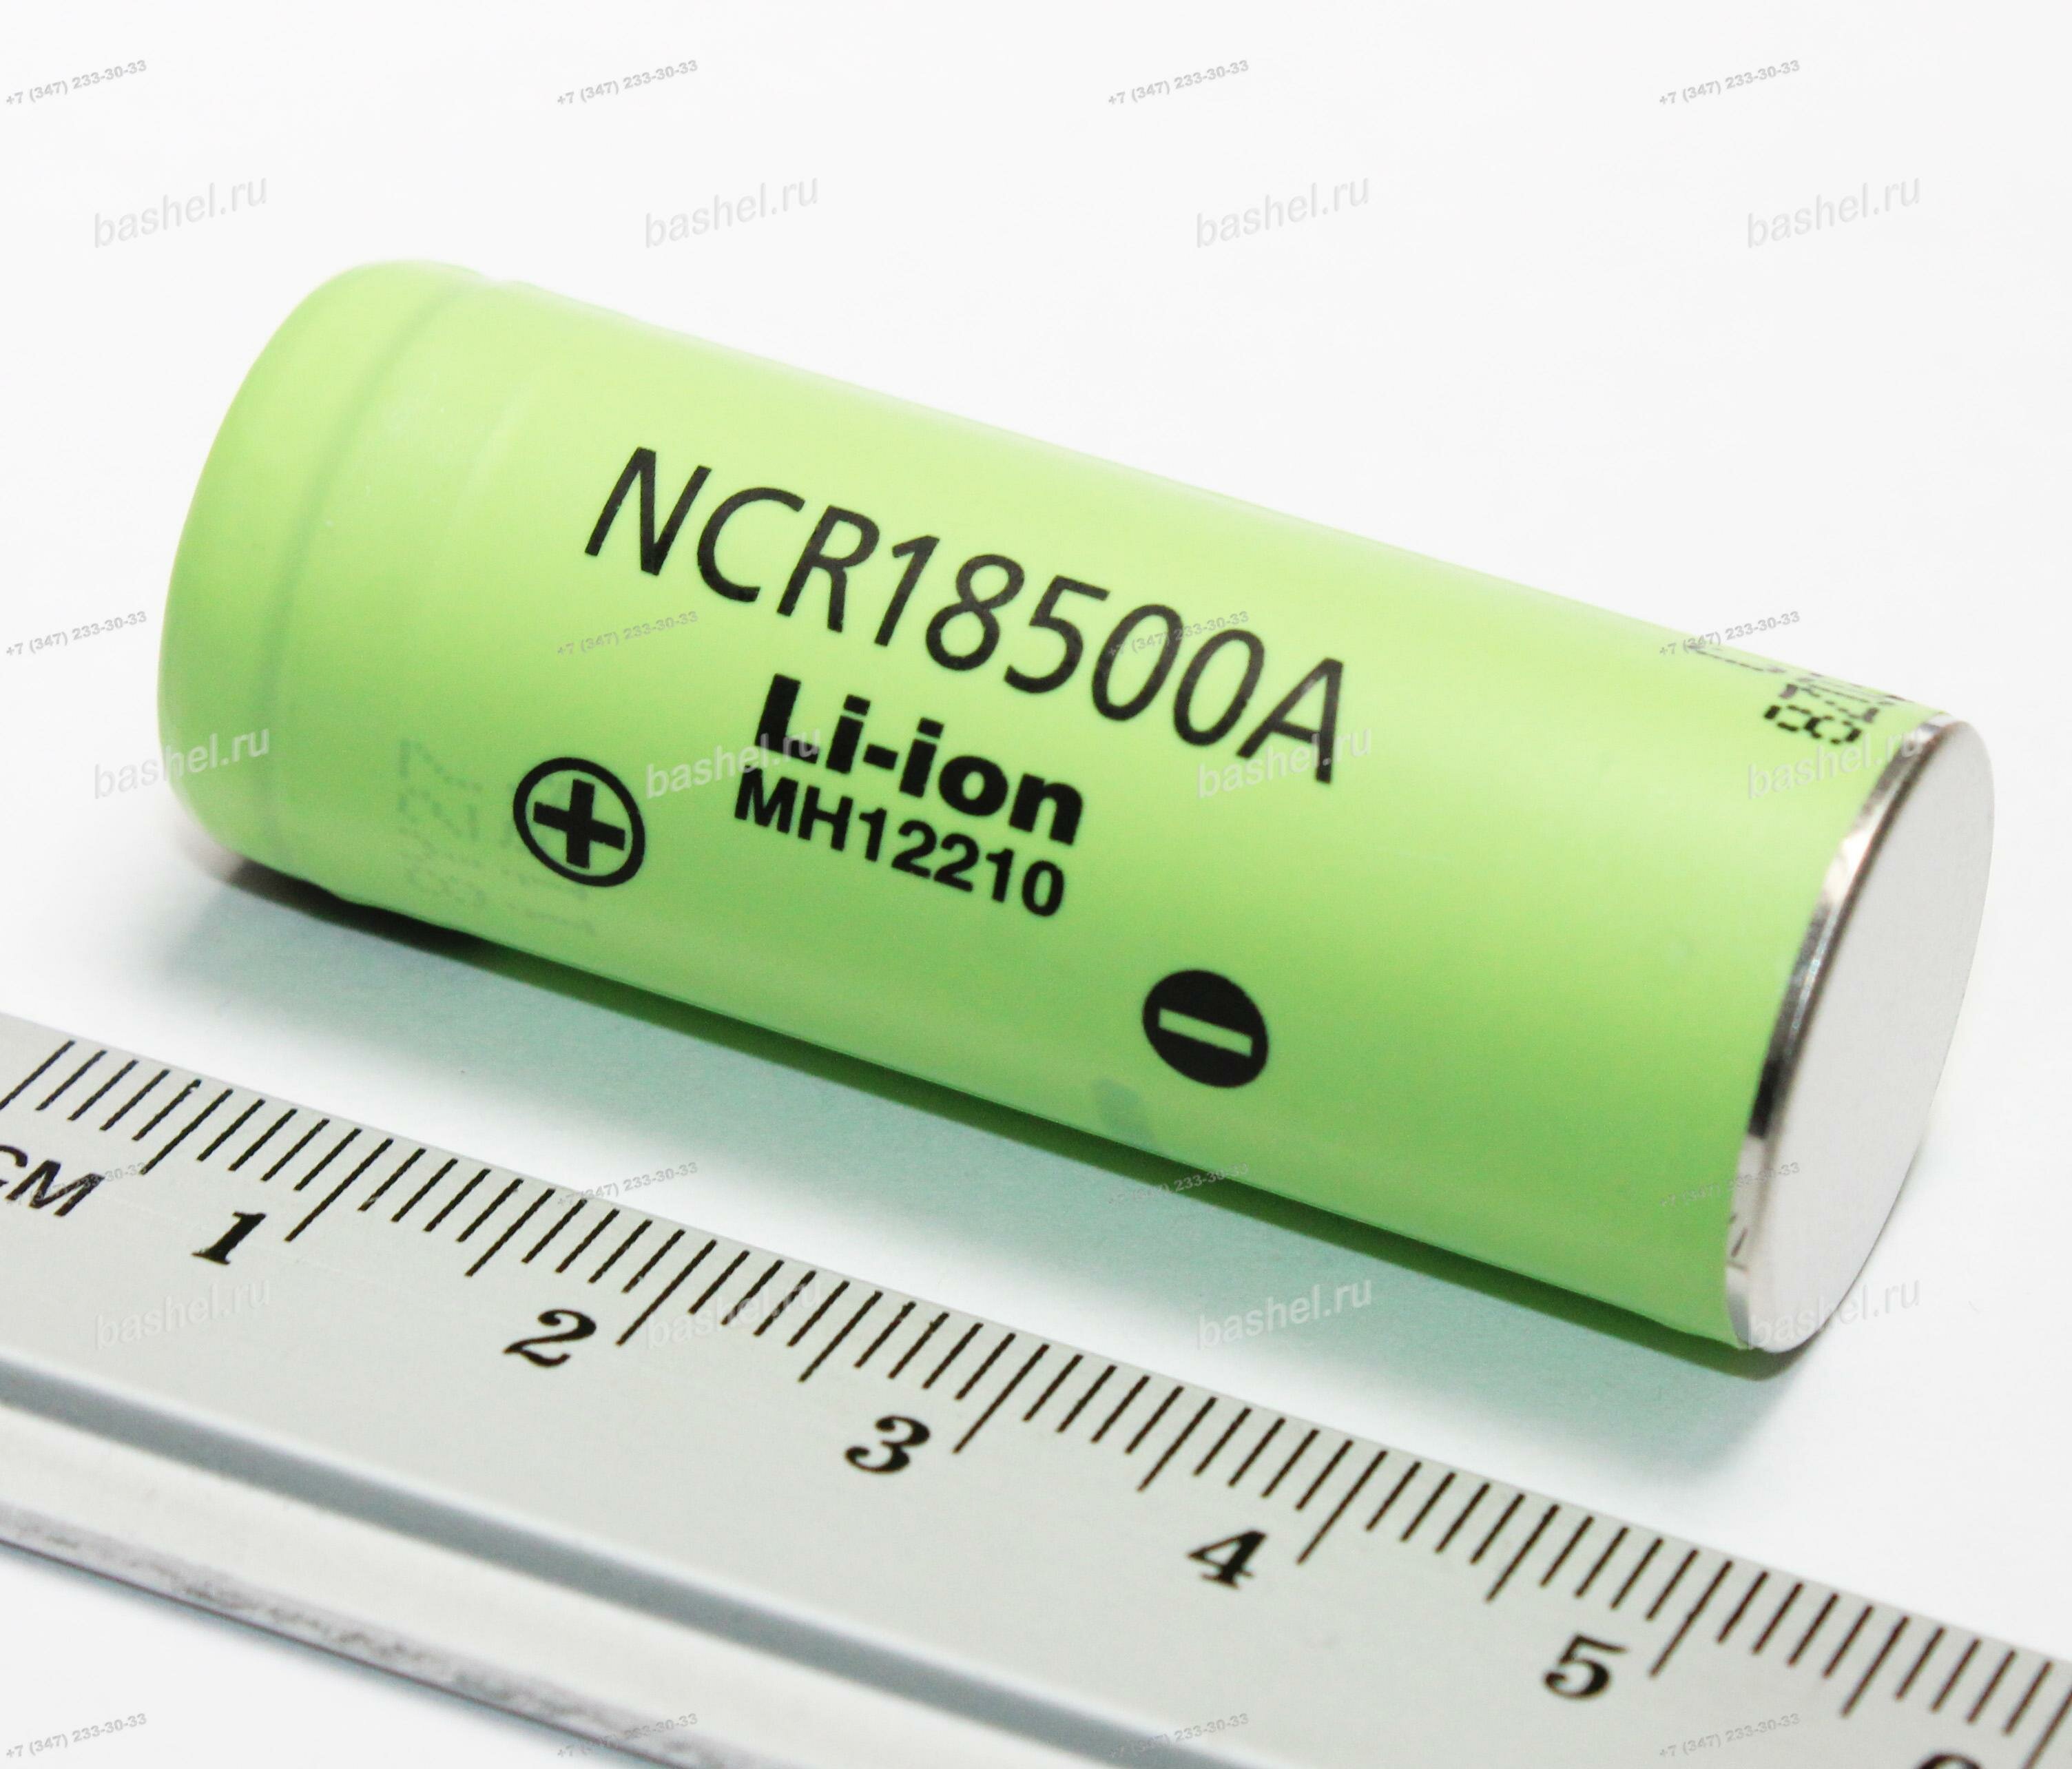 Аккумулятор PANASONIC NCR18500A 3,7V, 2040mAh, Li-ion